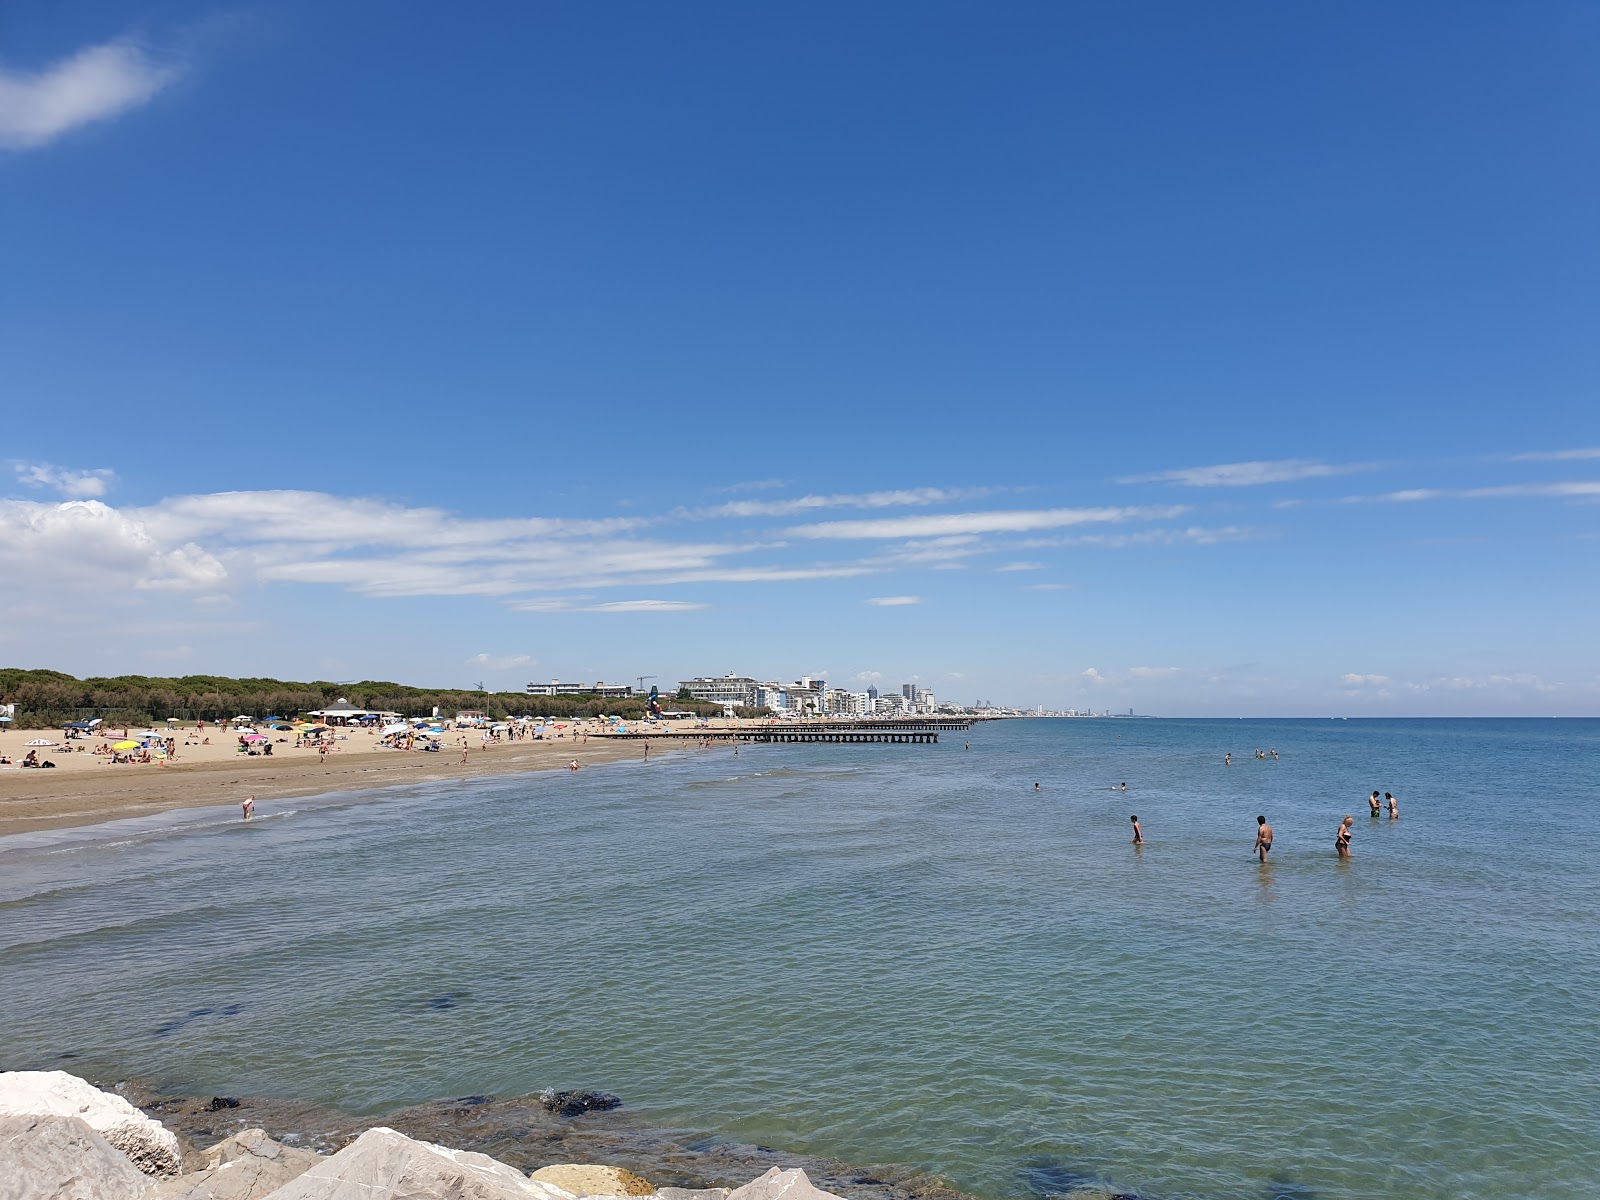 Foto de Spiaggia del Faro con playa amplia